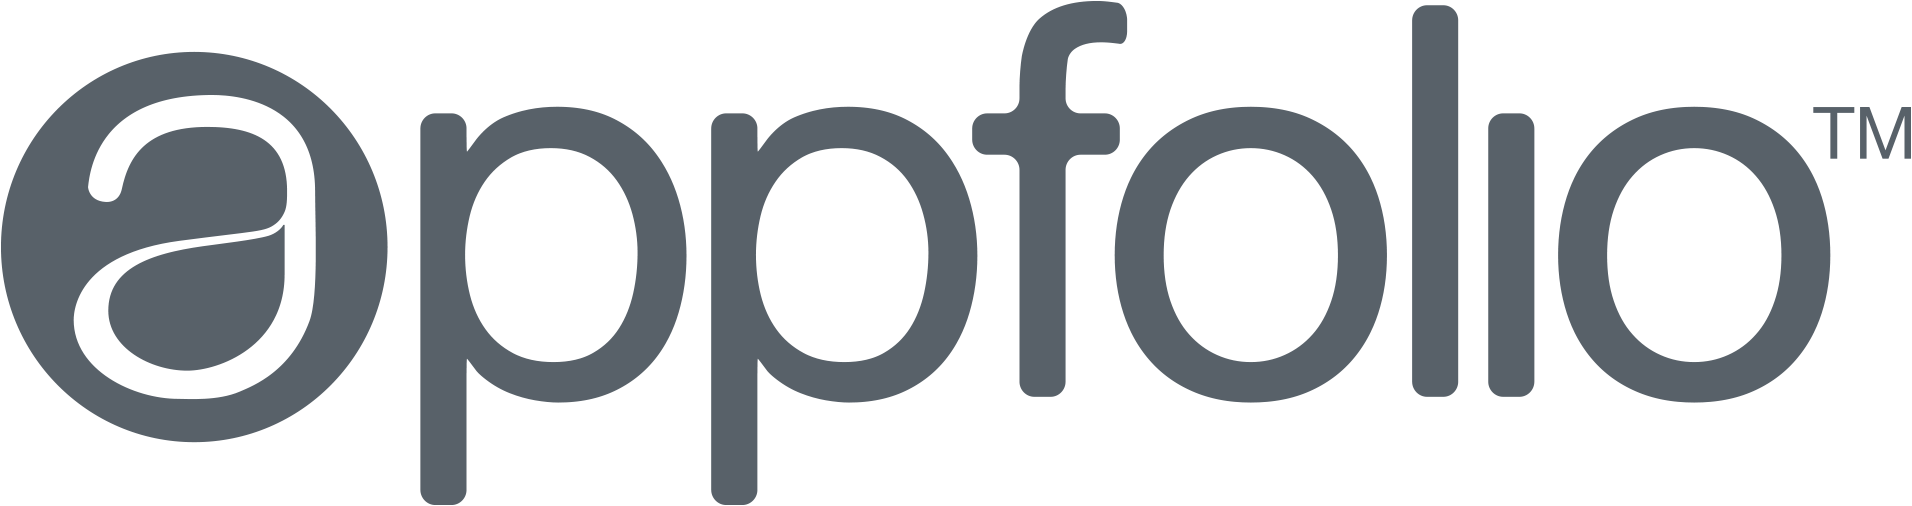 AppFolio Logo - File:Appfolio Logo.png - Wikimedia Commons